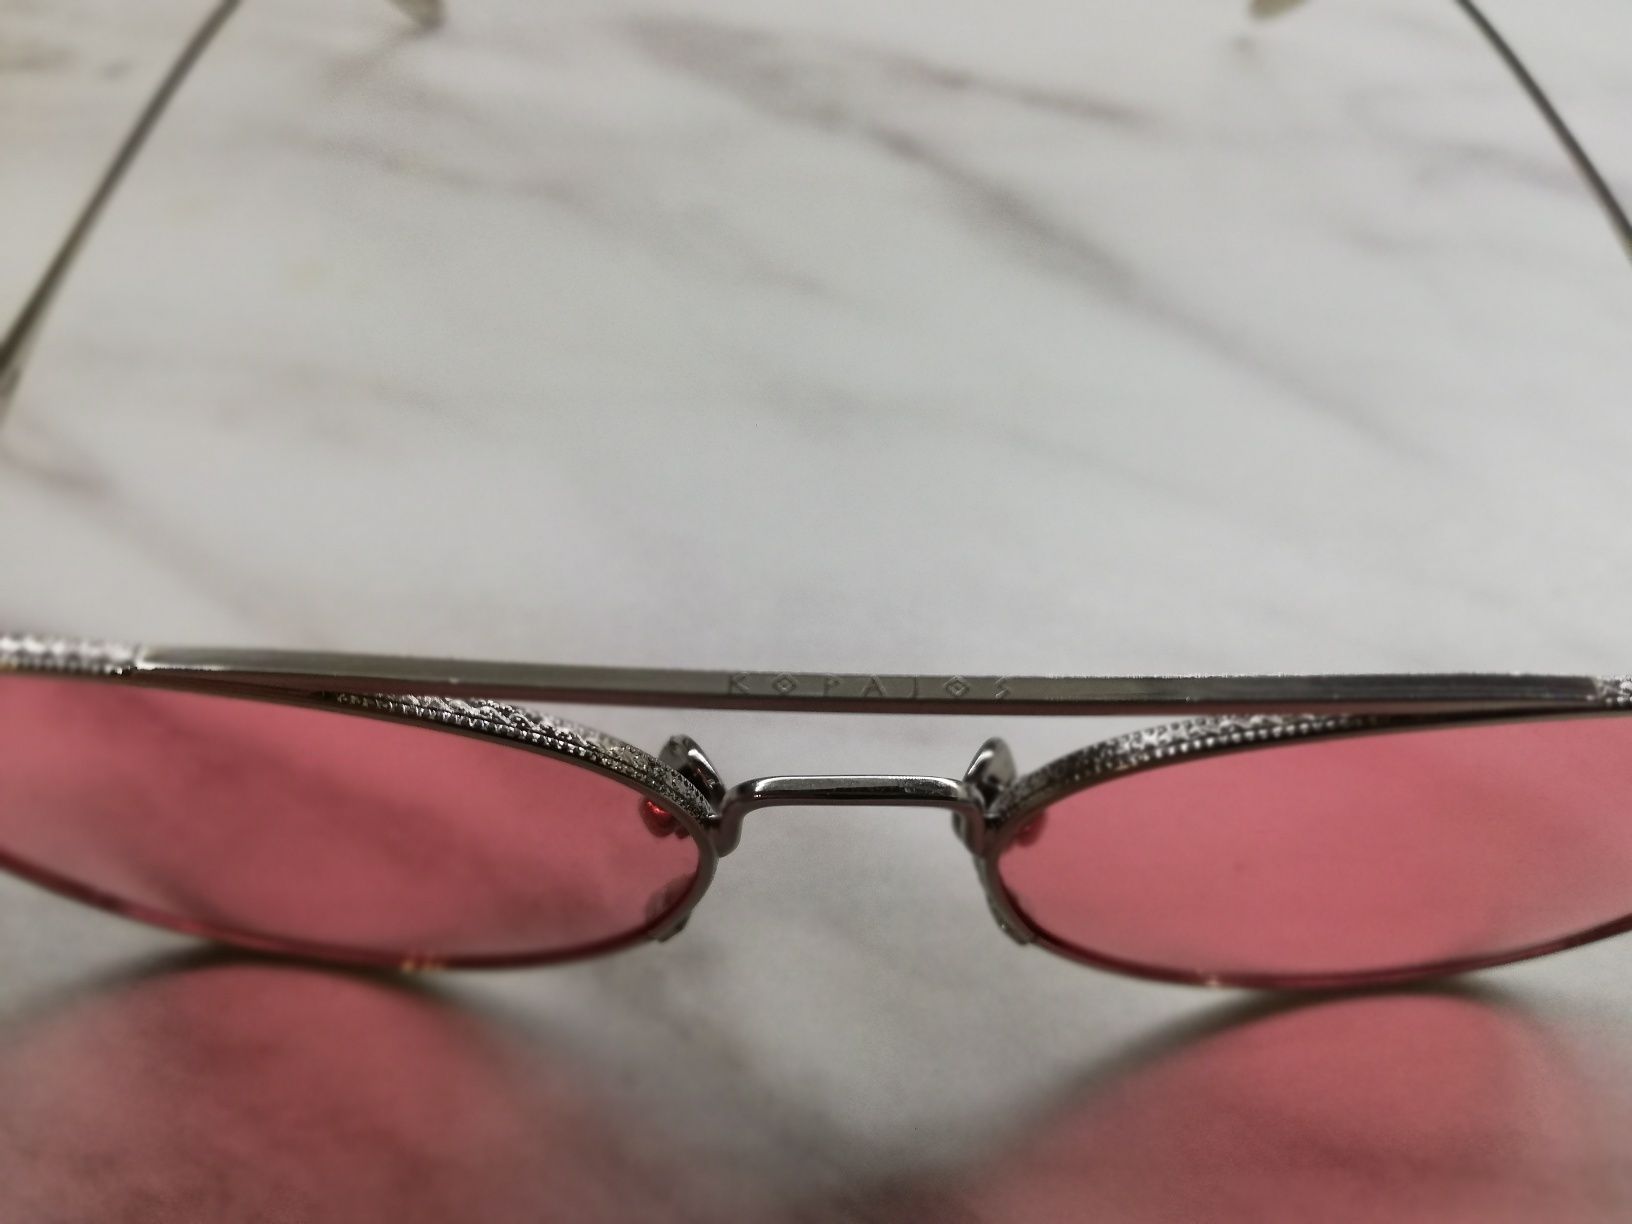 Унисекс слънчеви очила Kopajos Mykonos Solitare Silver Gun / Pink Lens